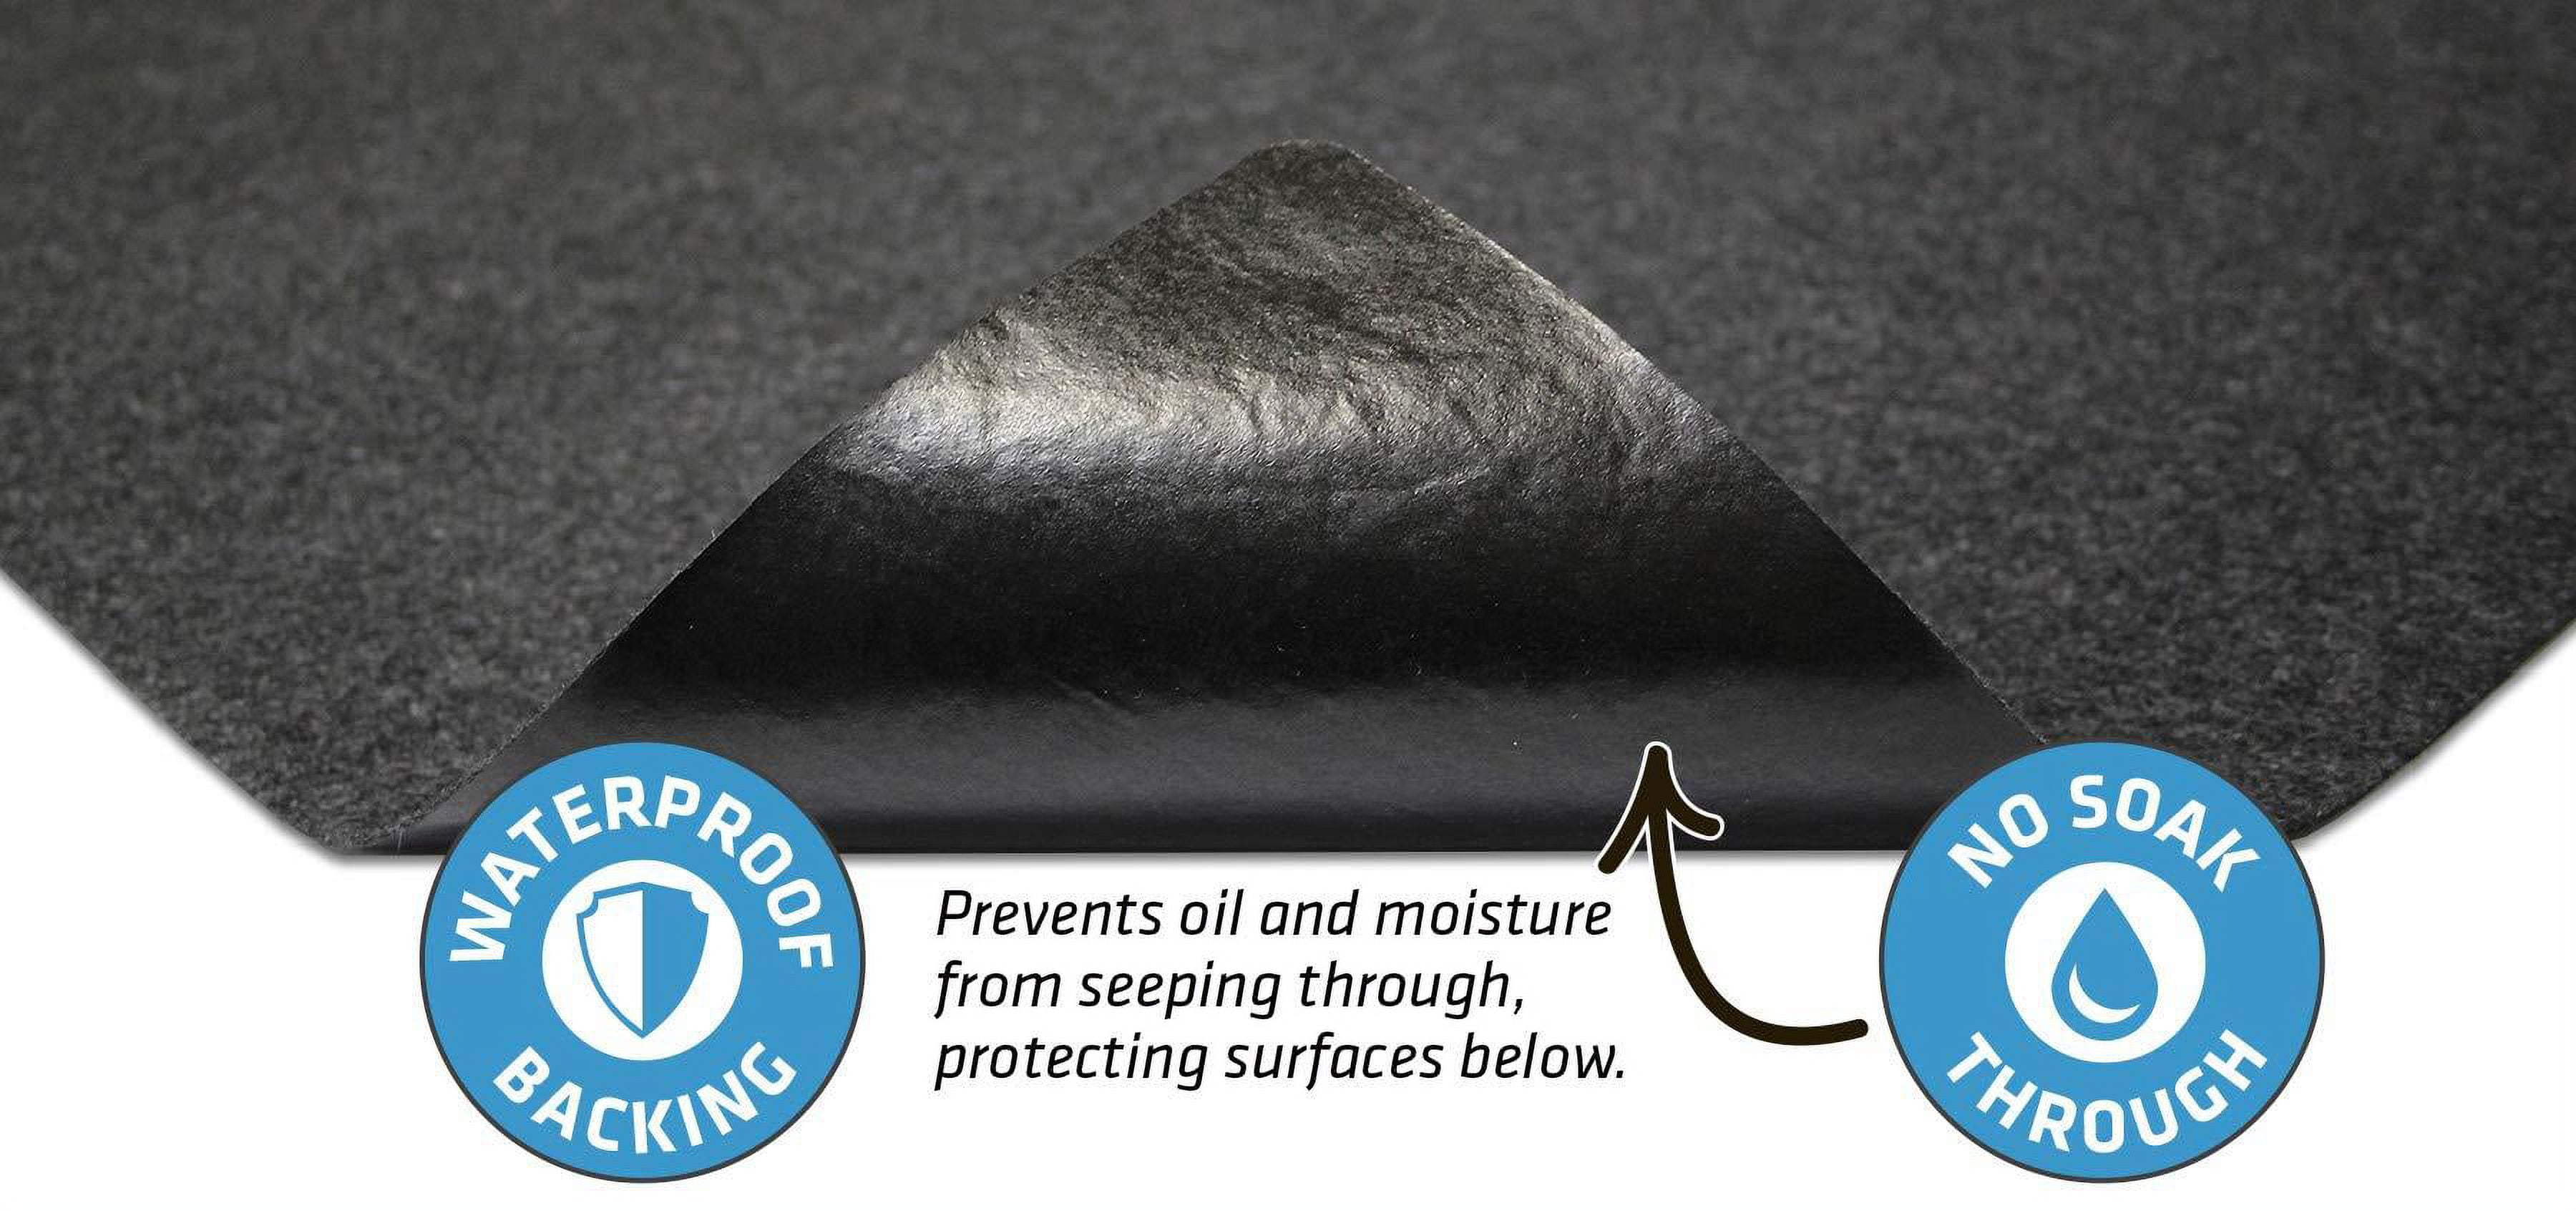 Drymate Premium Maintenance Mat Oil Spill Garage Floor Mat (58 x 72),  Absorbent, Waterproof, Contains Liquids, Protects Garage Surface or  Driveway